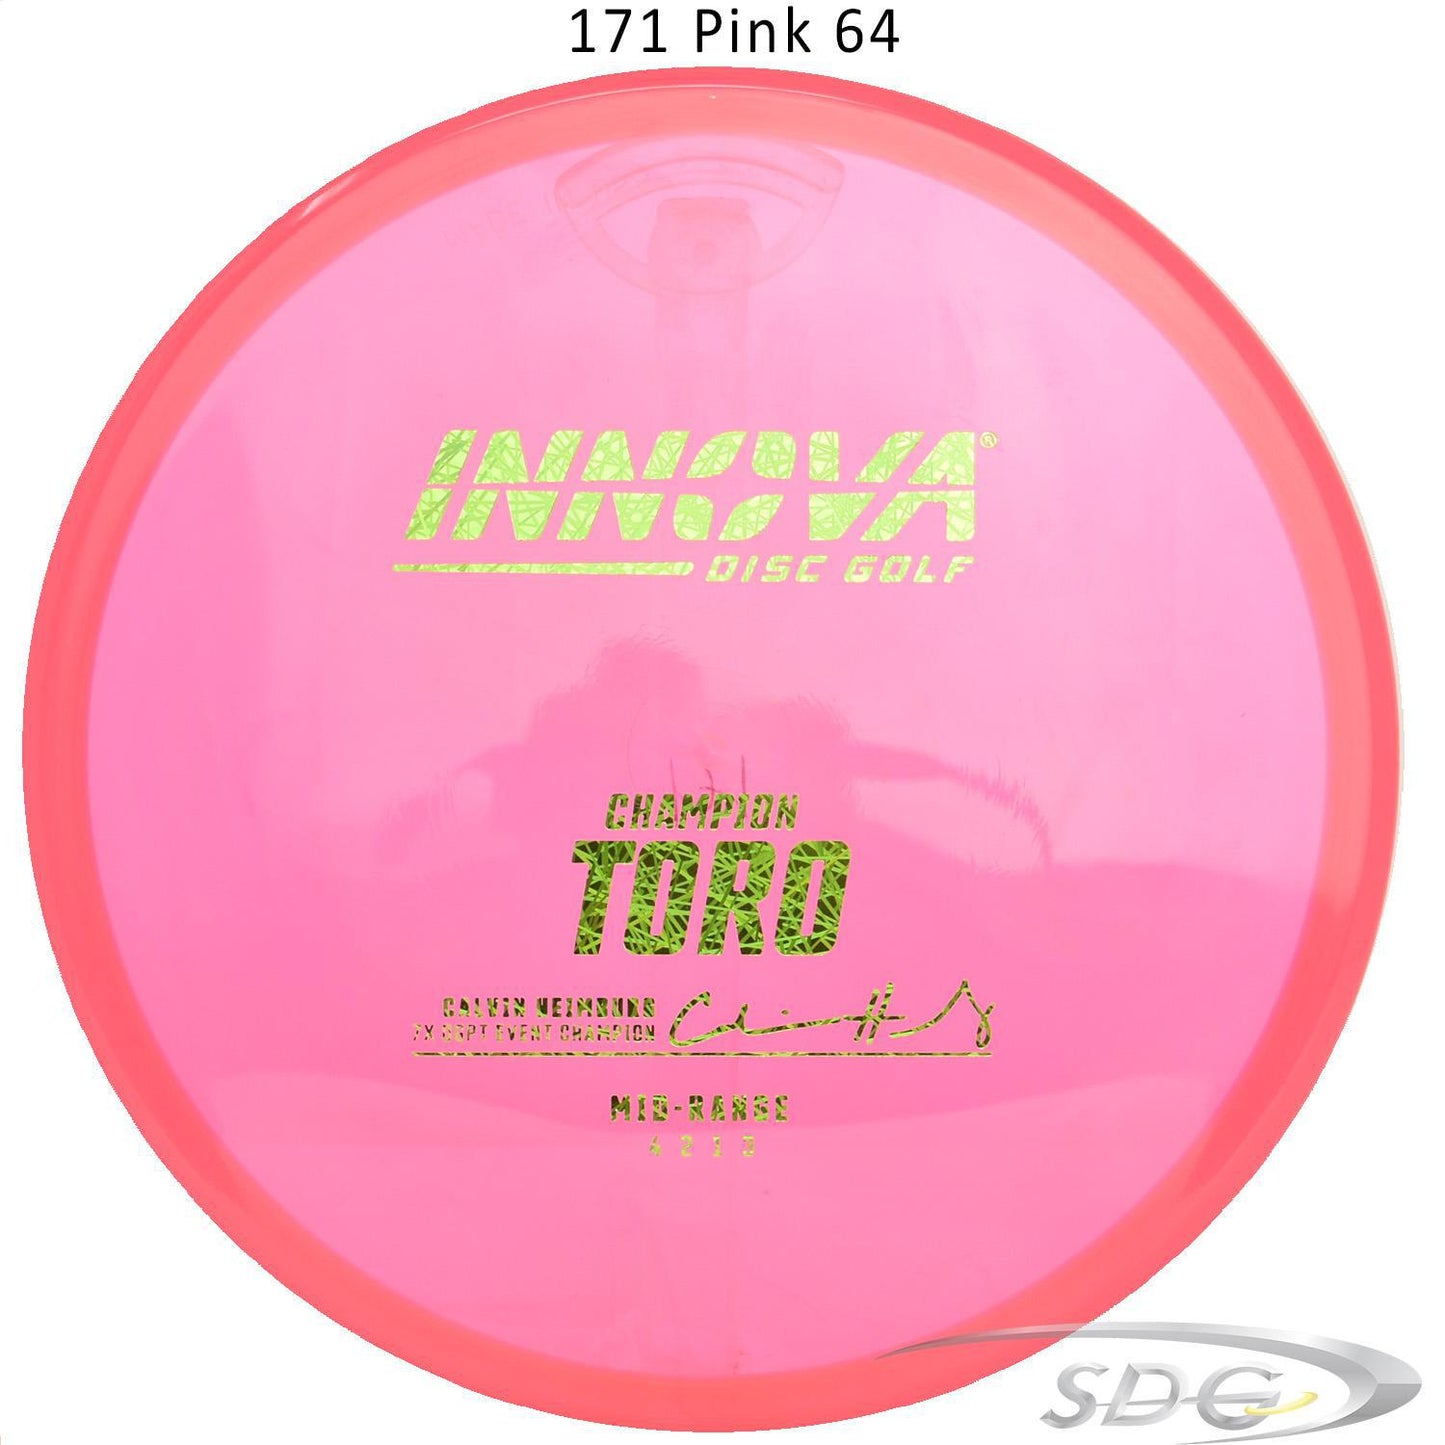 innova-champion-toro-calvin-heimburg-signature-disc-golf-mid-range 171 Pink 64 